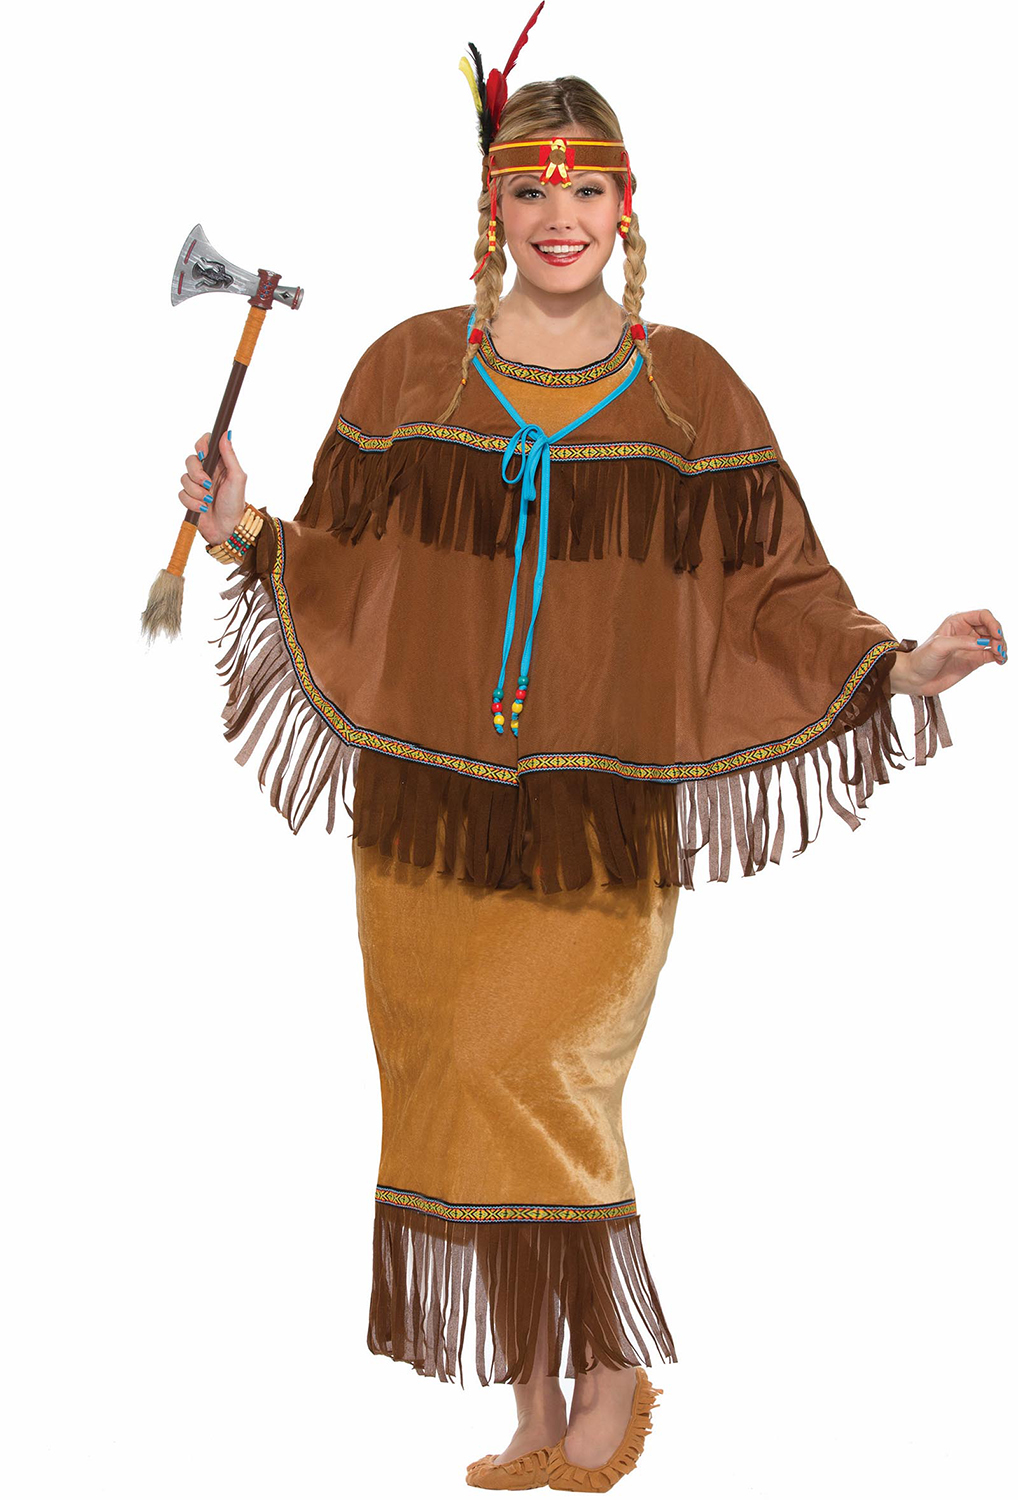 Princess tomahawk costume (adult - plus size 18-22). 